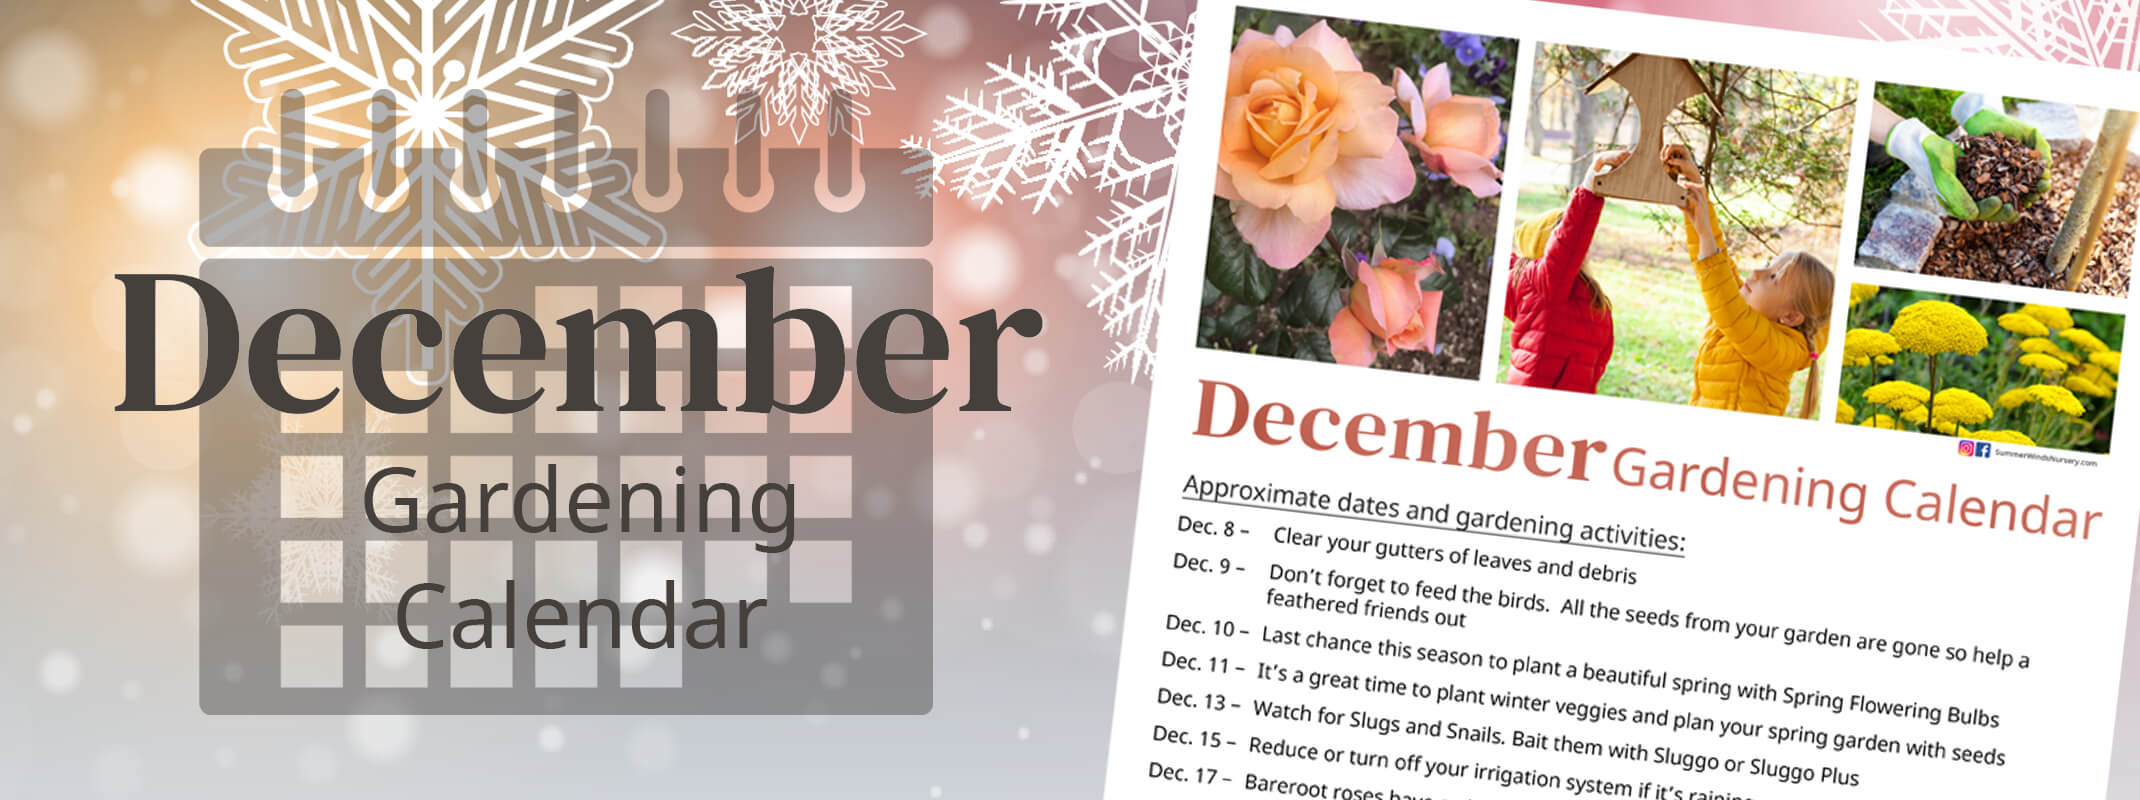 december gardening calendar with calendar tips